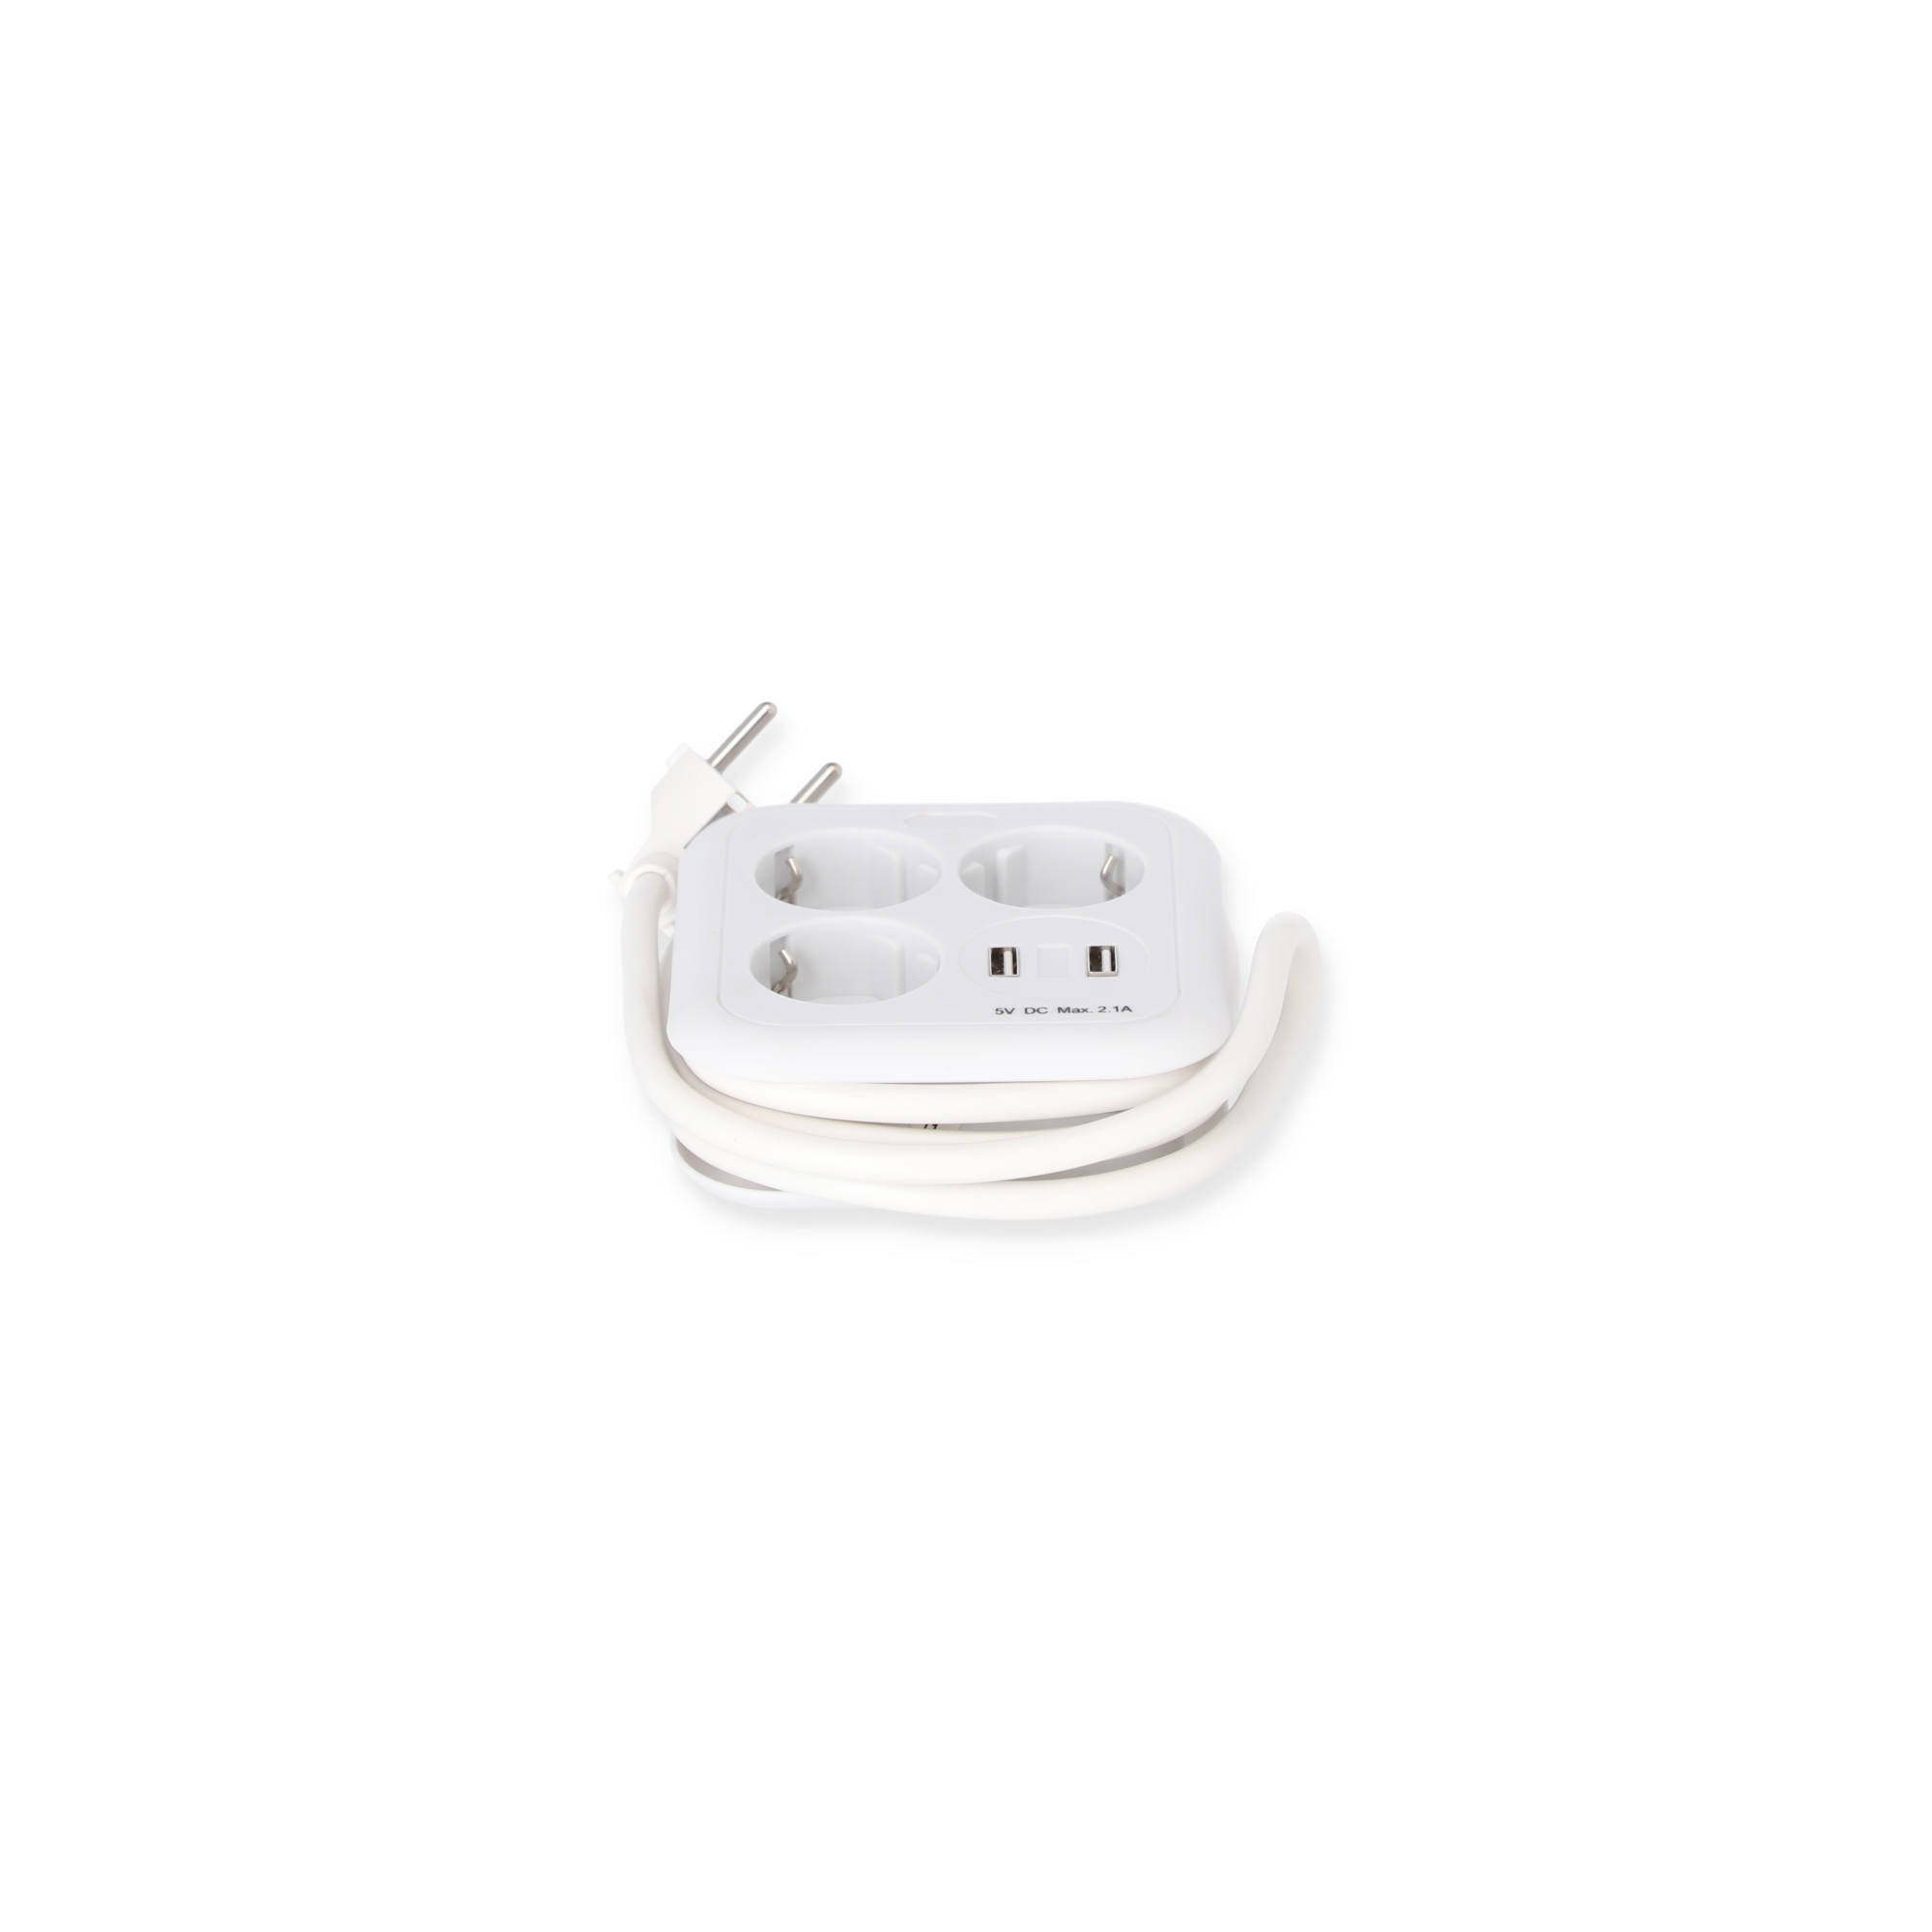 Steckdosenleiste weiß 3-fach mit 2 USB-Ports + product picture